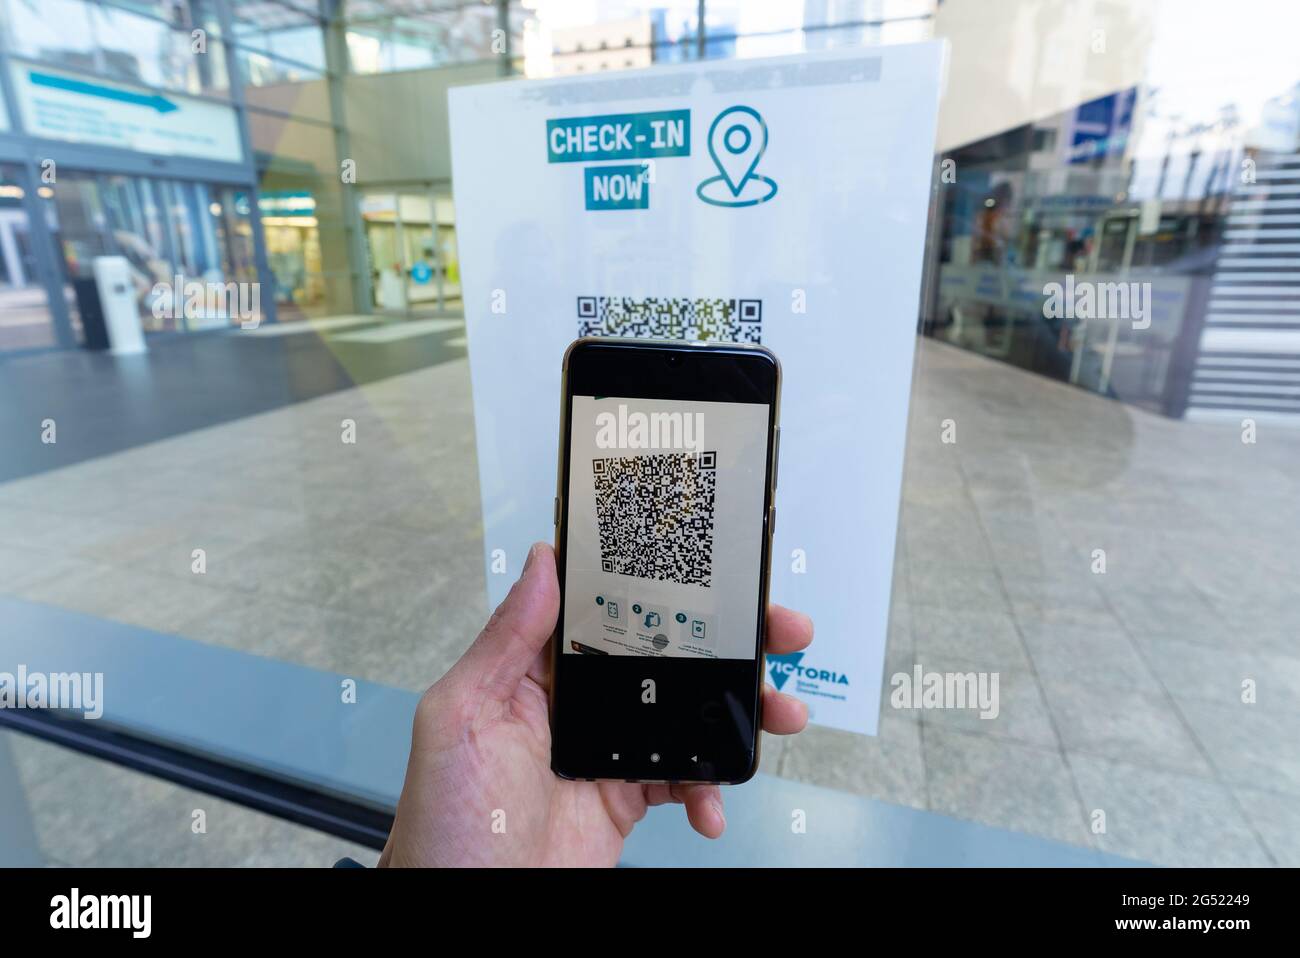 Melbourne, Australia - Jun 24, 2021: Check in using QR code when entering a shopping mall Stock Photo